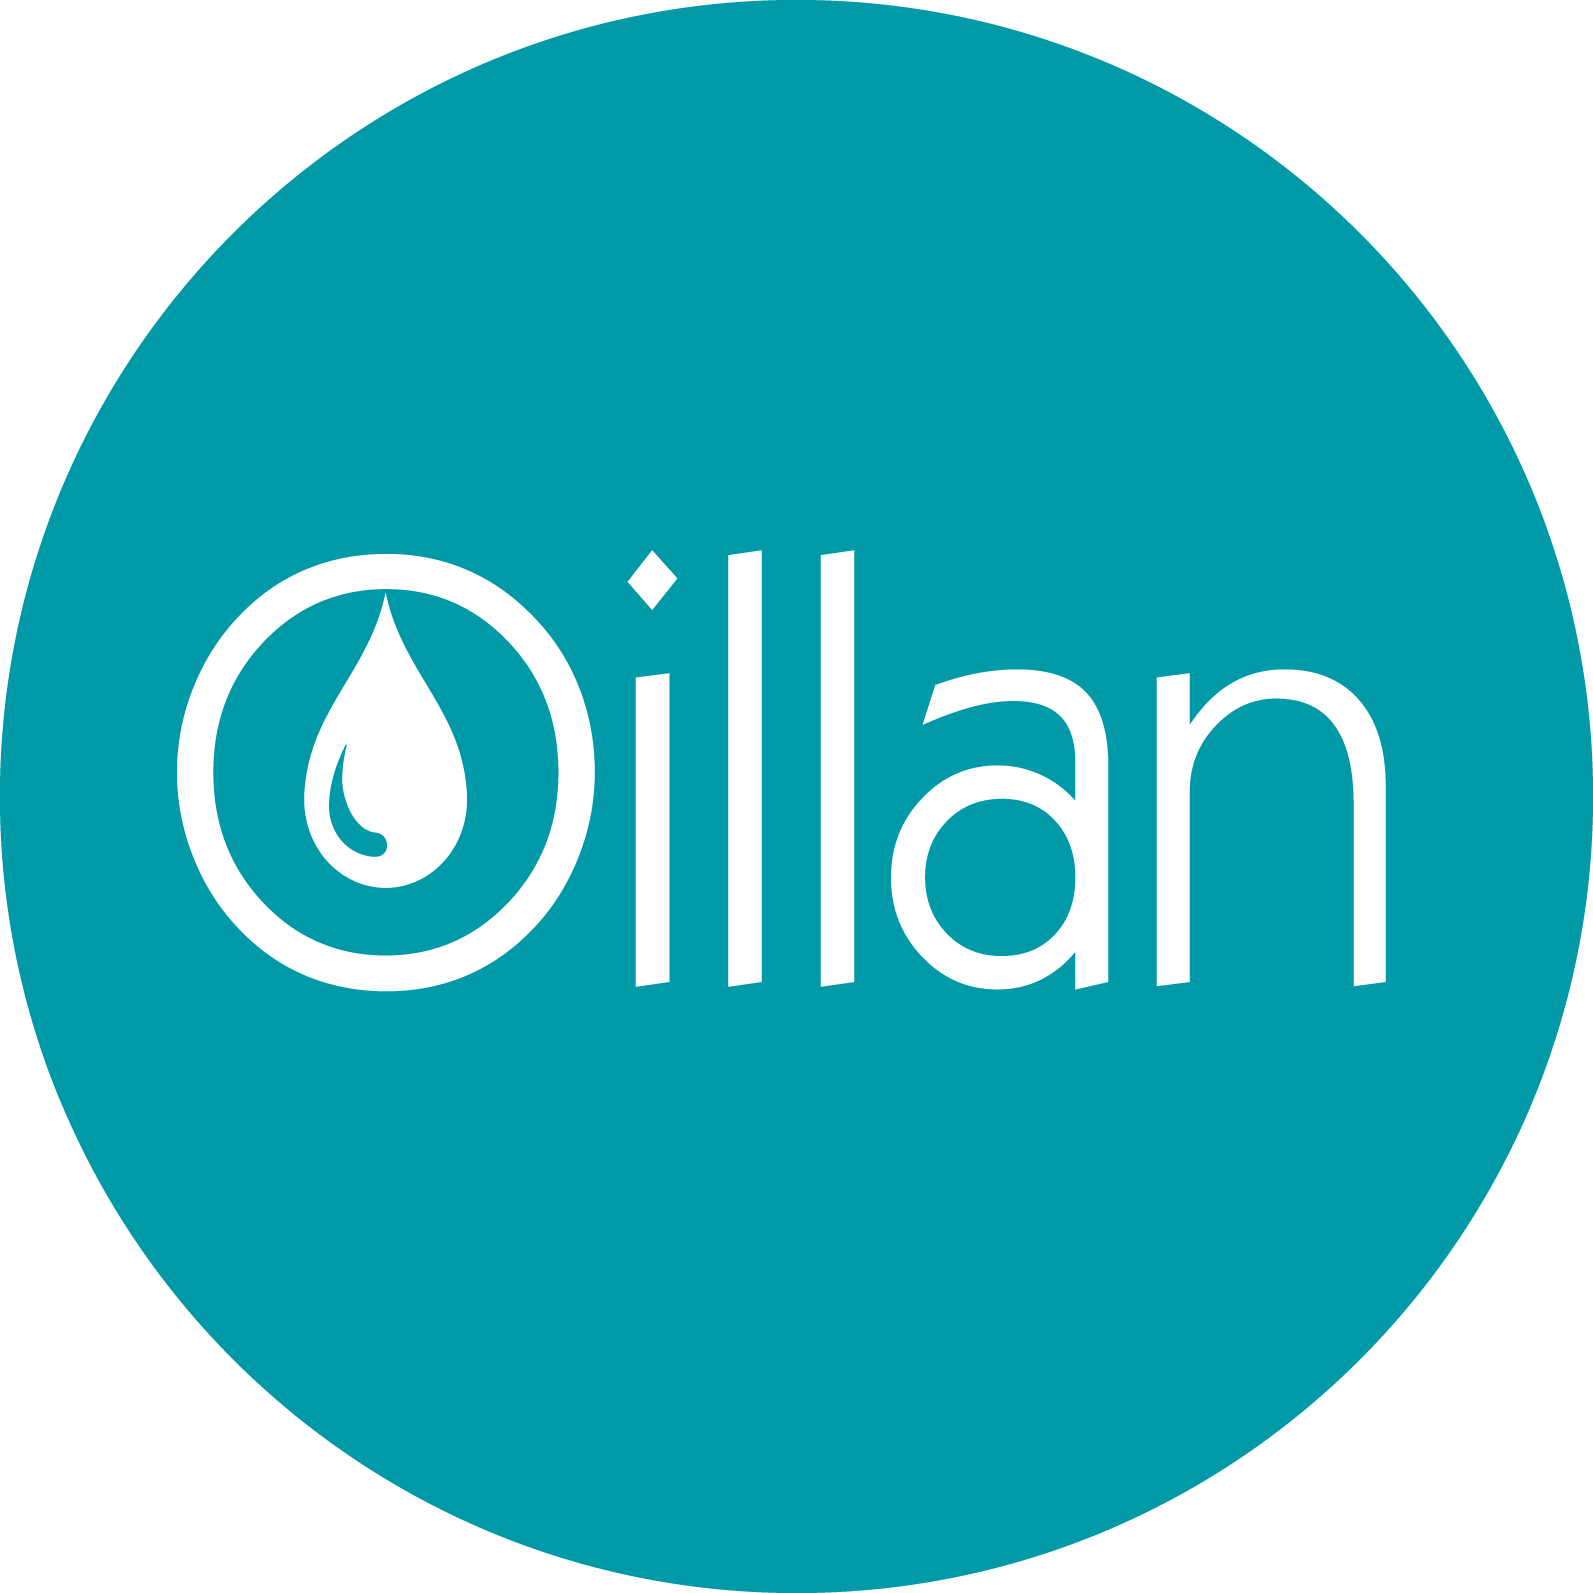 oillan logo kolko biale